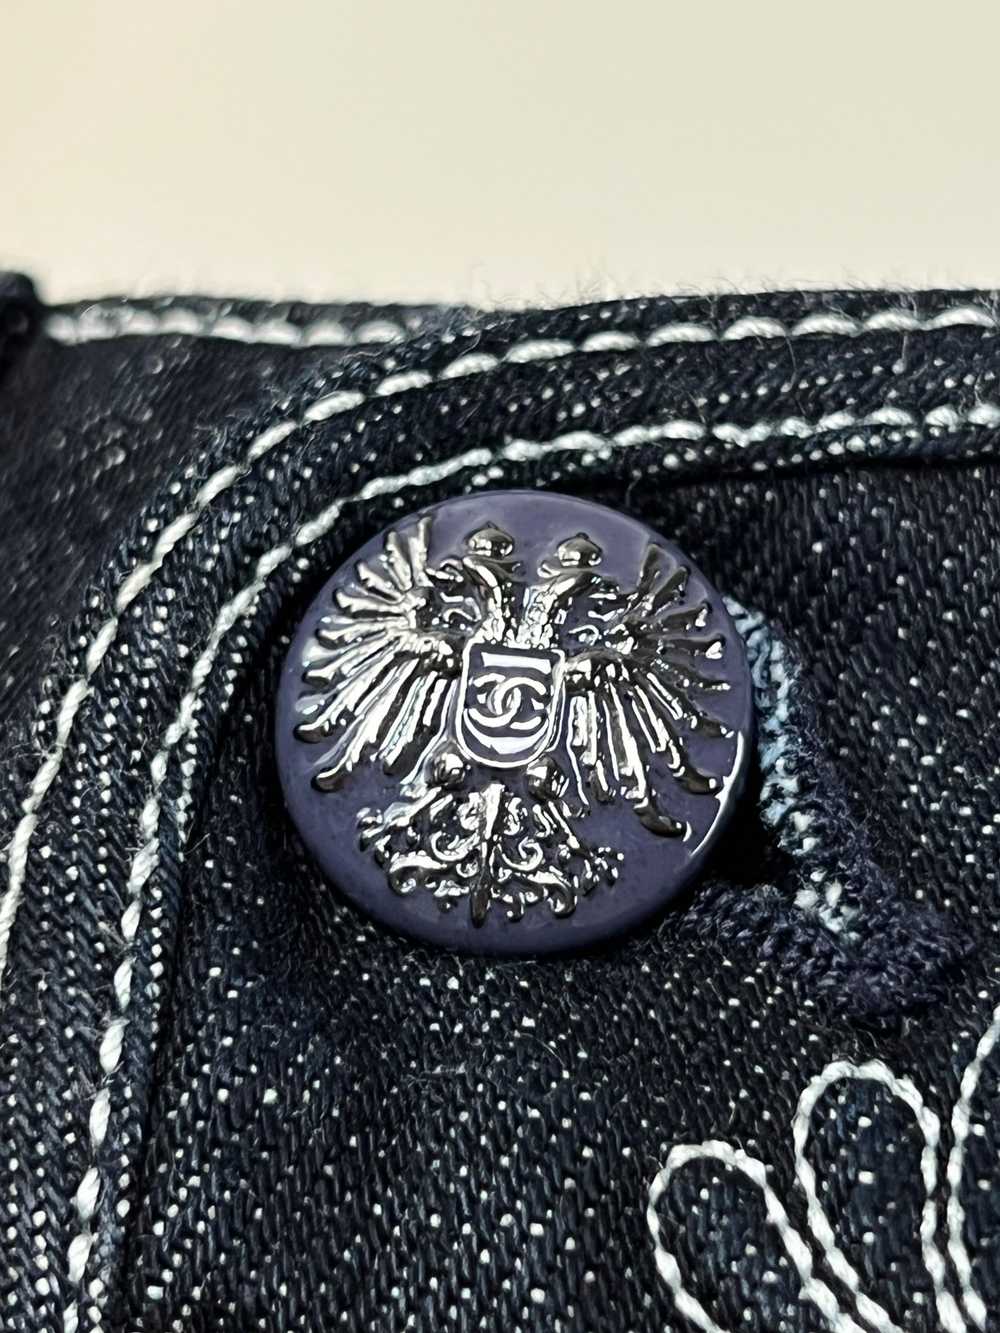 Chanel Paris/Salzburg Embroidered Crop Jeans - image 5